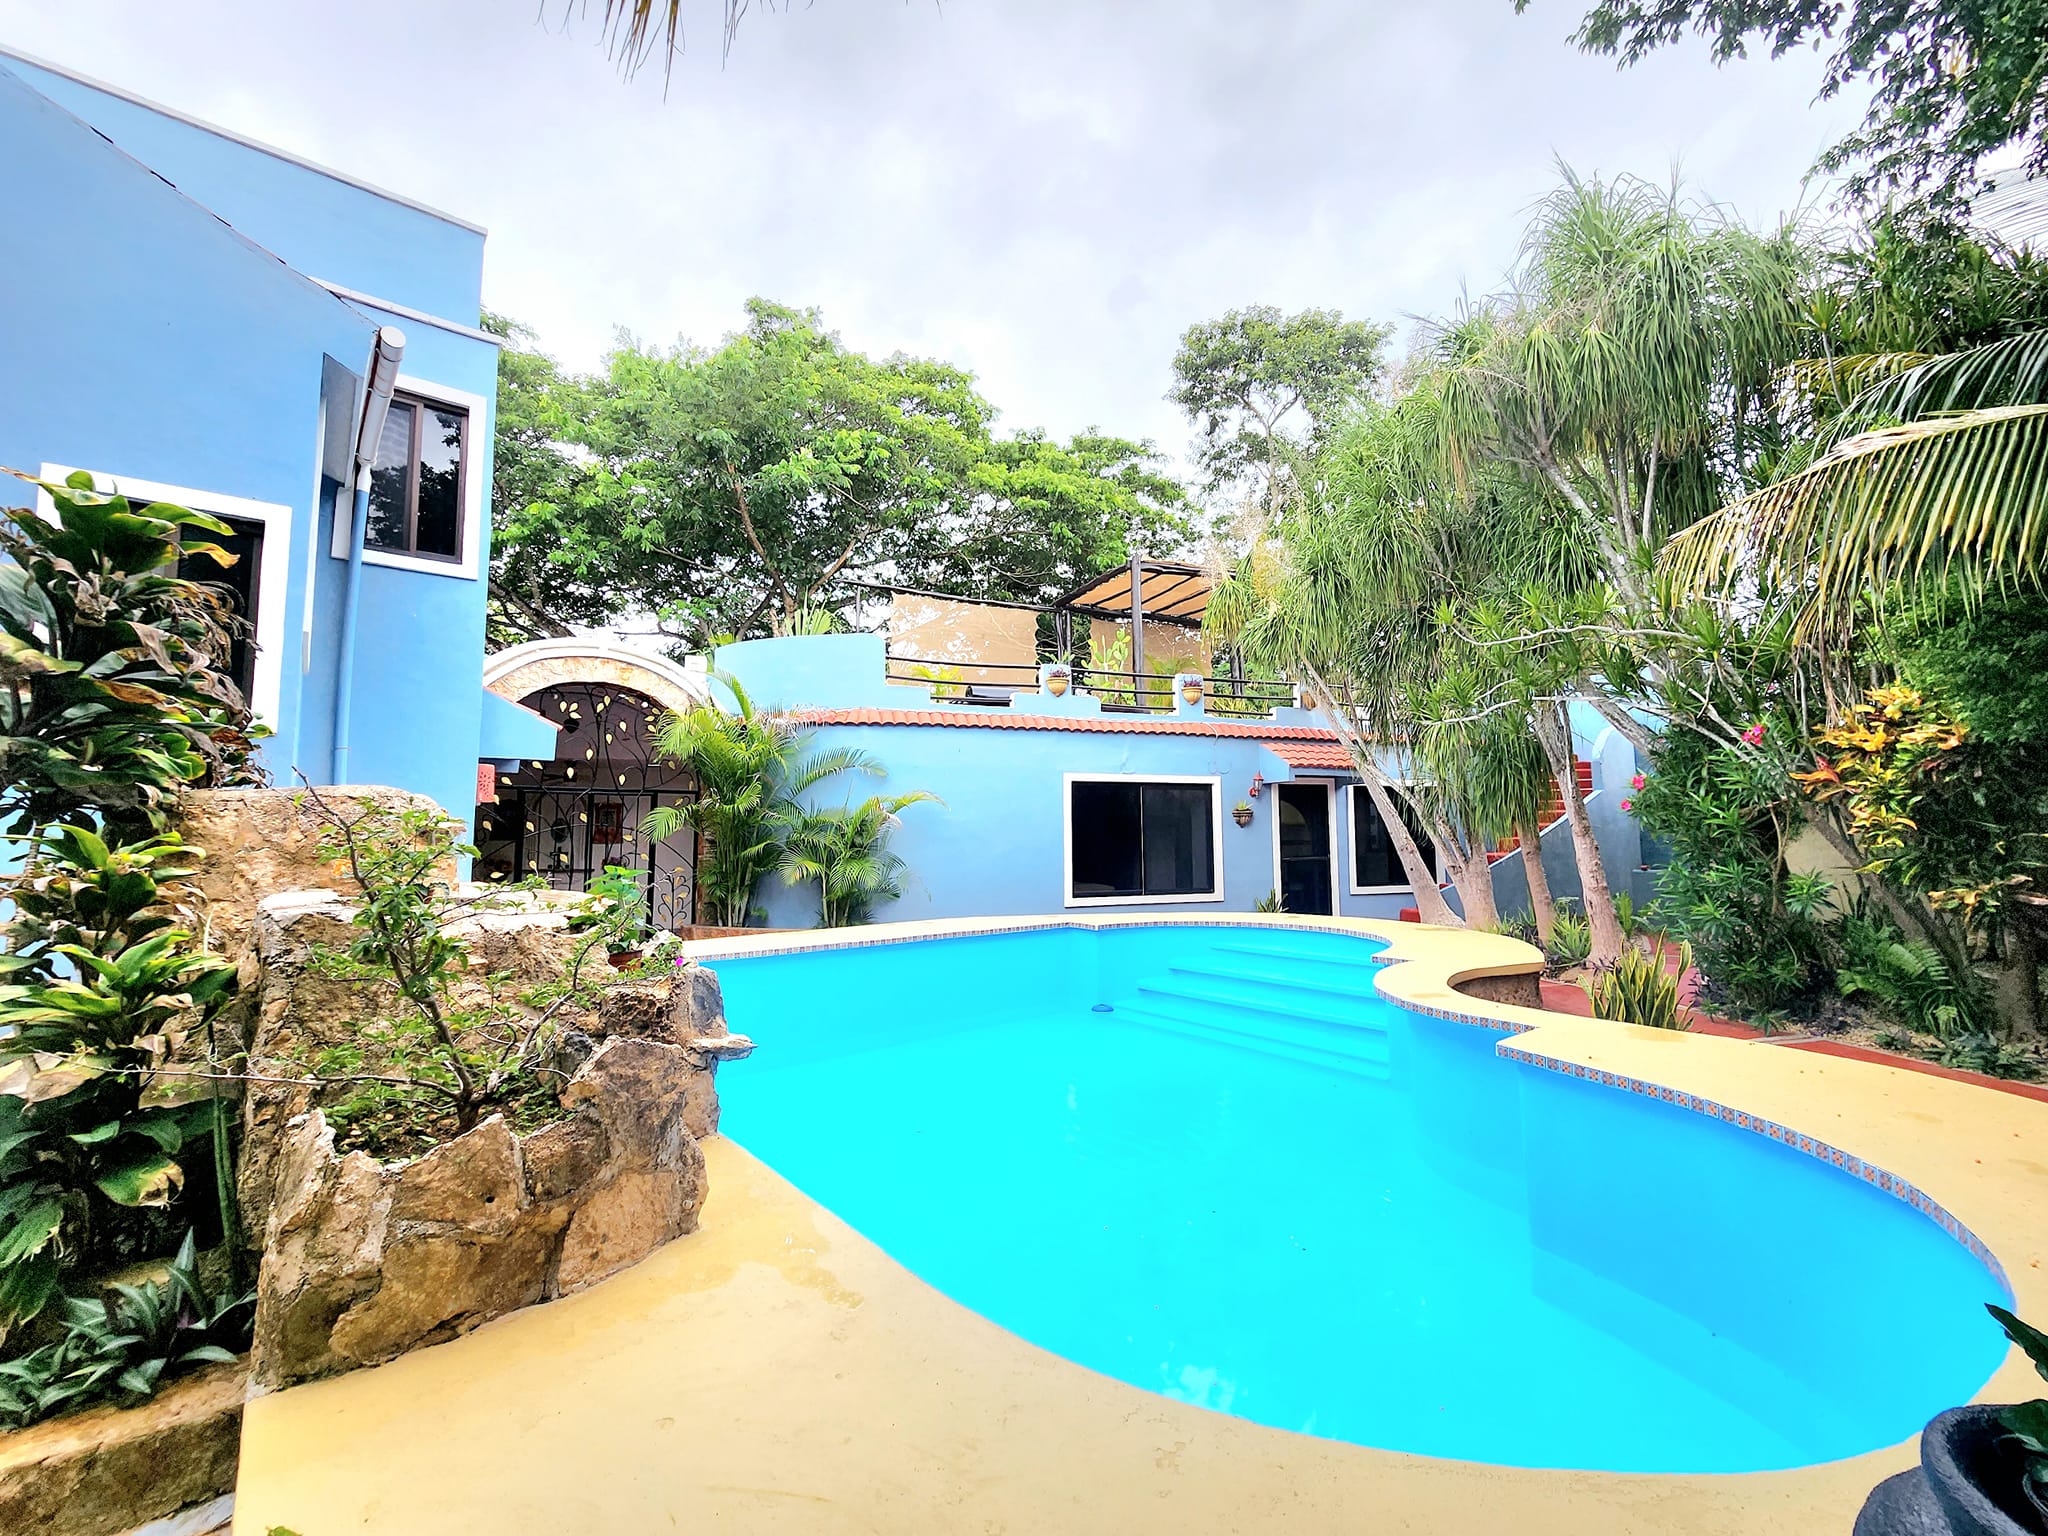 Cholul Small Hacienda 4/4+ Pool $339K